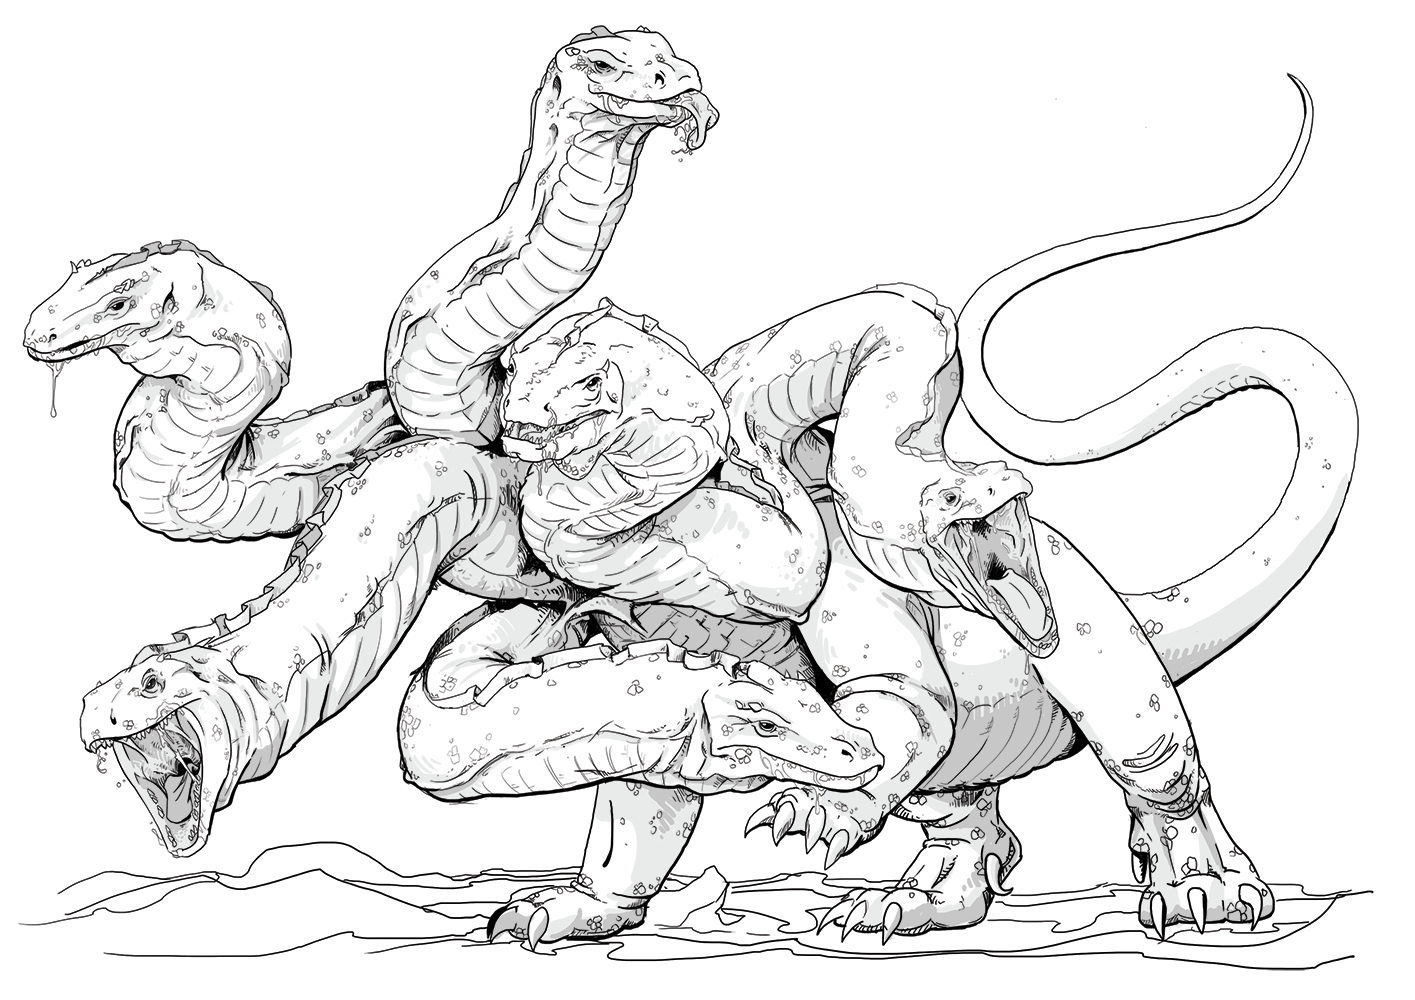 Nine-Headed Lernean Hydra by Mariana Ruiz Villarreal